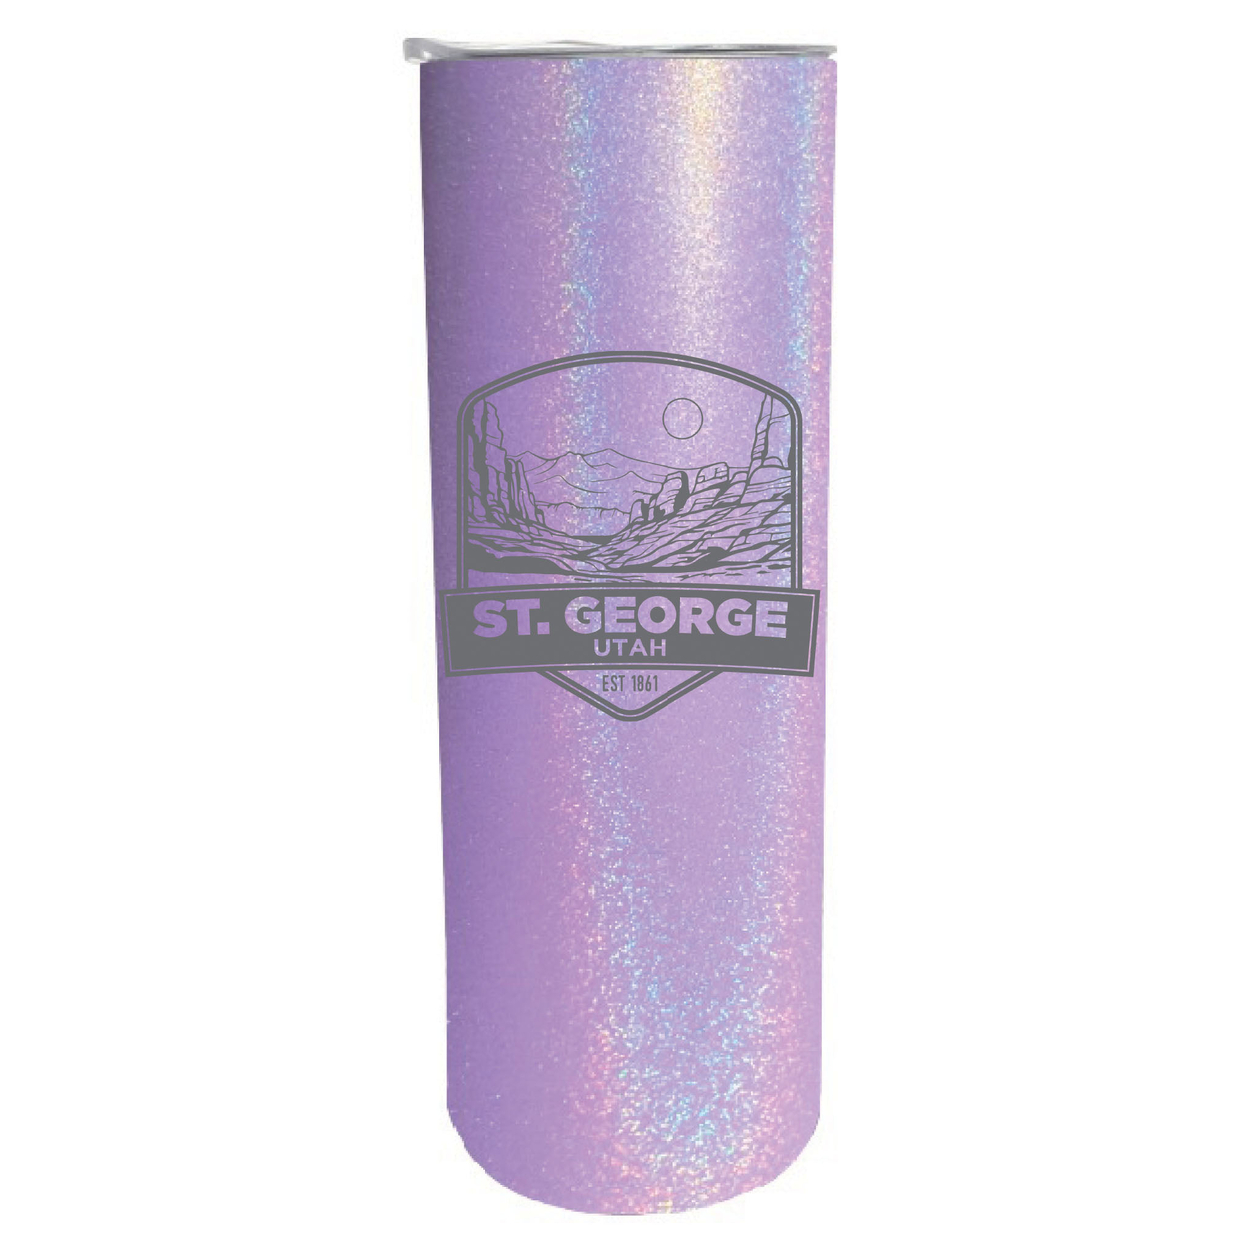 St. George Utah Souvenir 20 Oz Engraved Insulated Stainless Steel Skinny Tumbler - Gray Glitter,,2-Pack